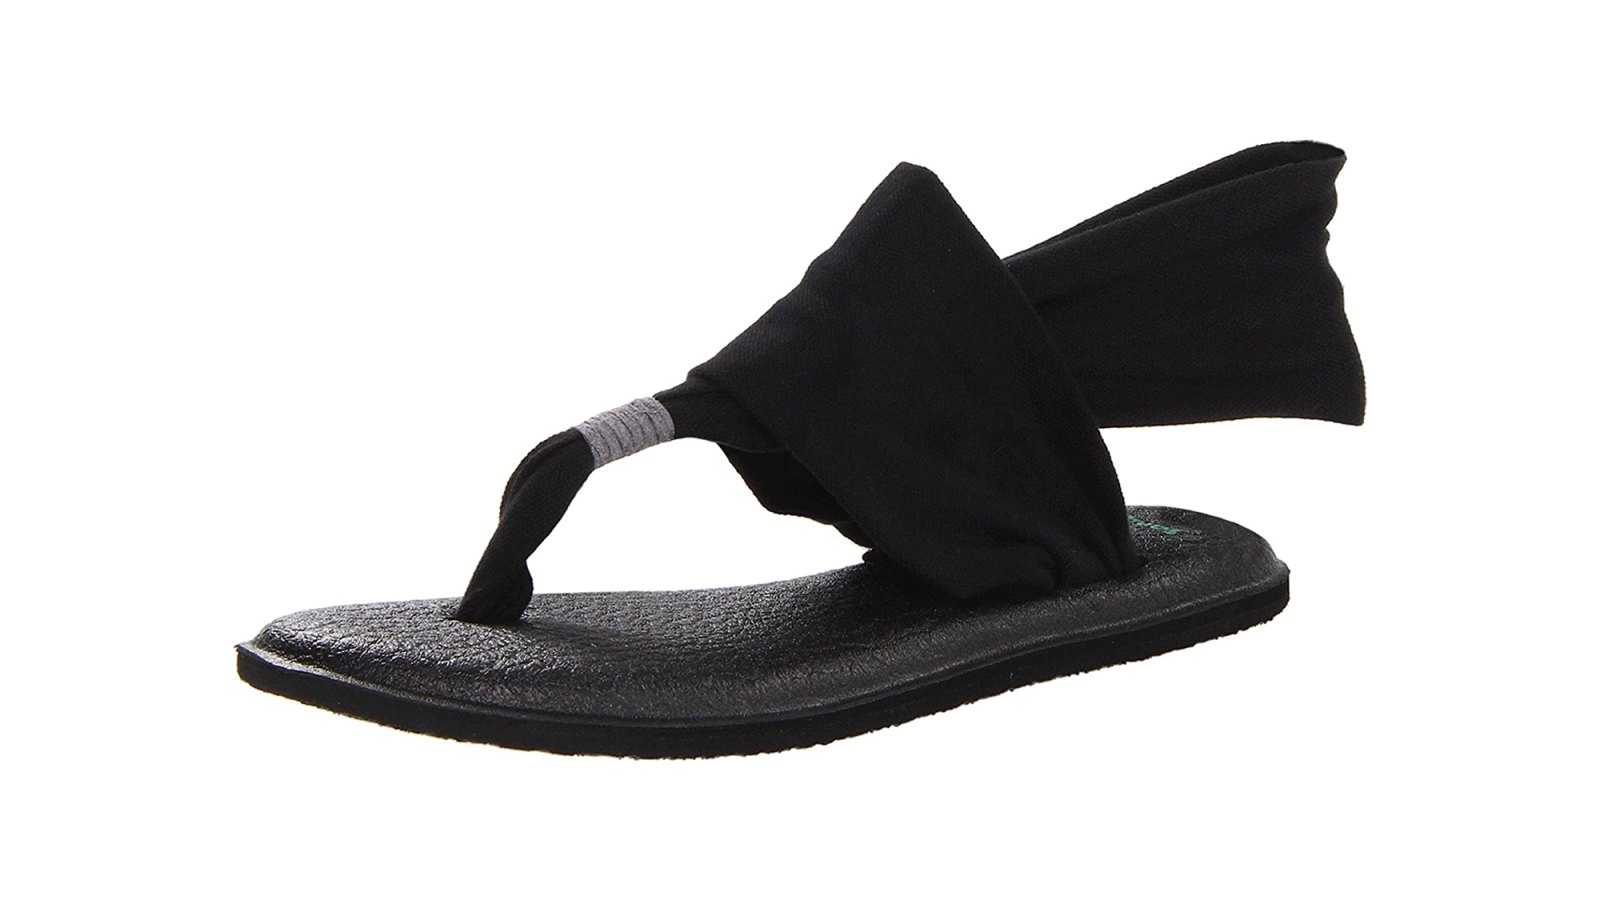 Sanuk Yoga Mat Shoes 8 Distributor South Africa - Sanuk For Sale